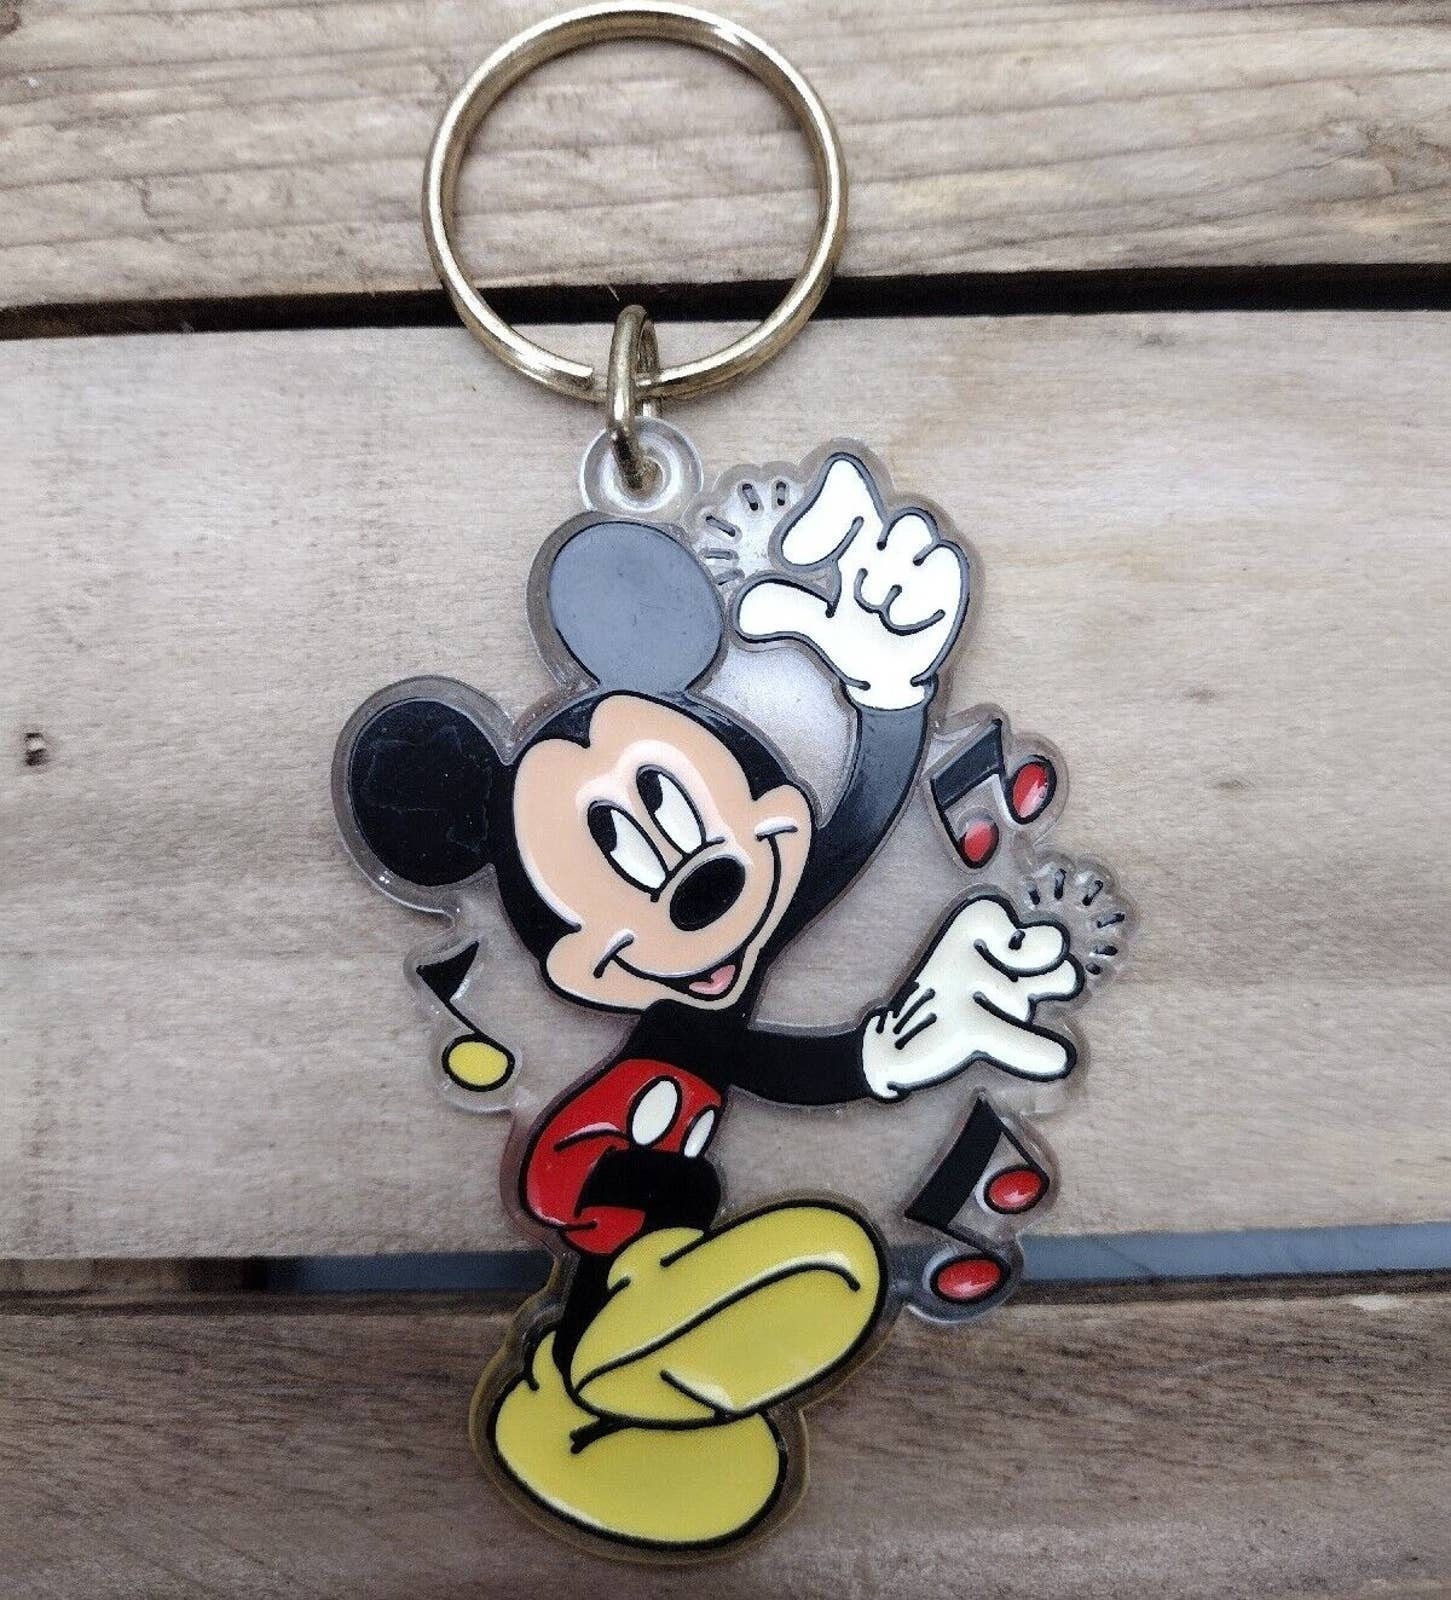 Plasticolor 004124R01 Mickey Mouse Vintage Disney Enamel Keychain , Black